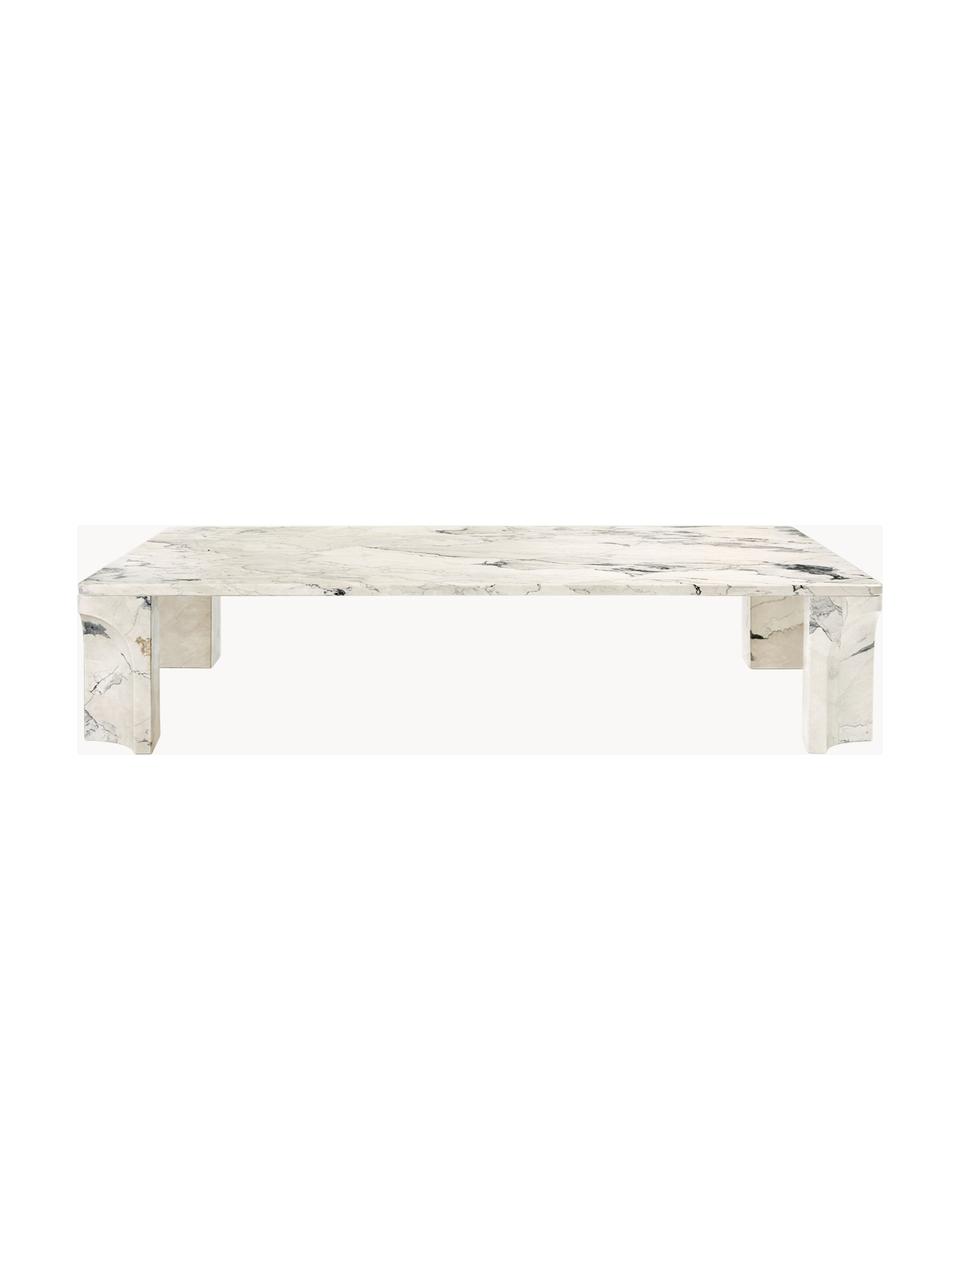 Tavolino in pietra calcarea Doric larg. 140 cm, Calcare, Pietra calcarea beige chiaro, tonalità grigie, Larg. 140 x Prof. 80 cm